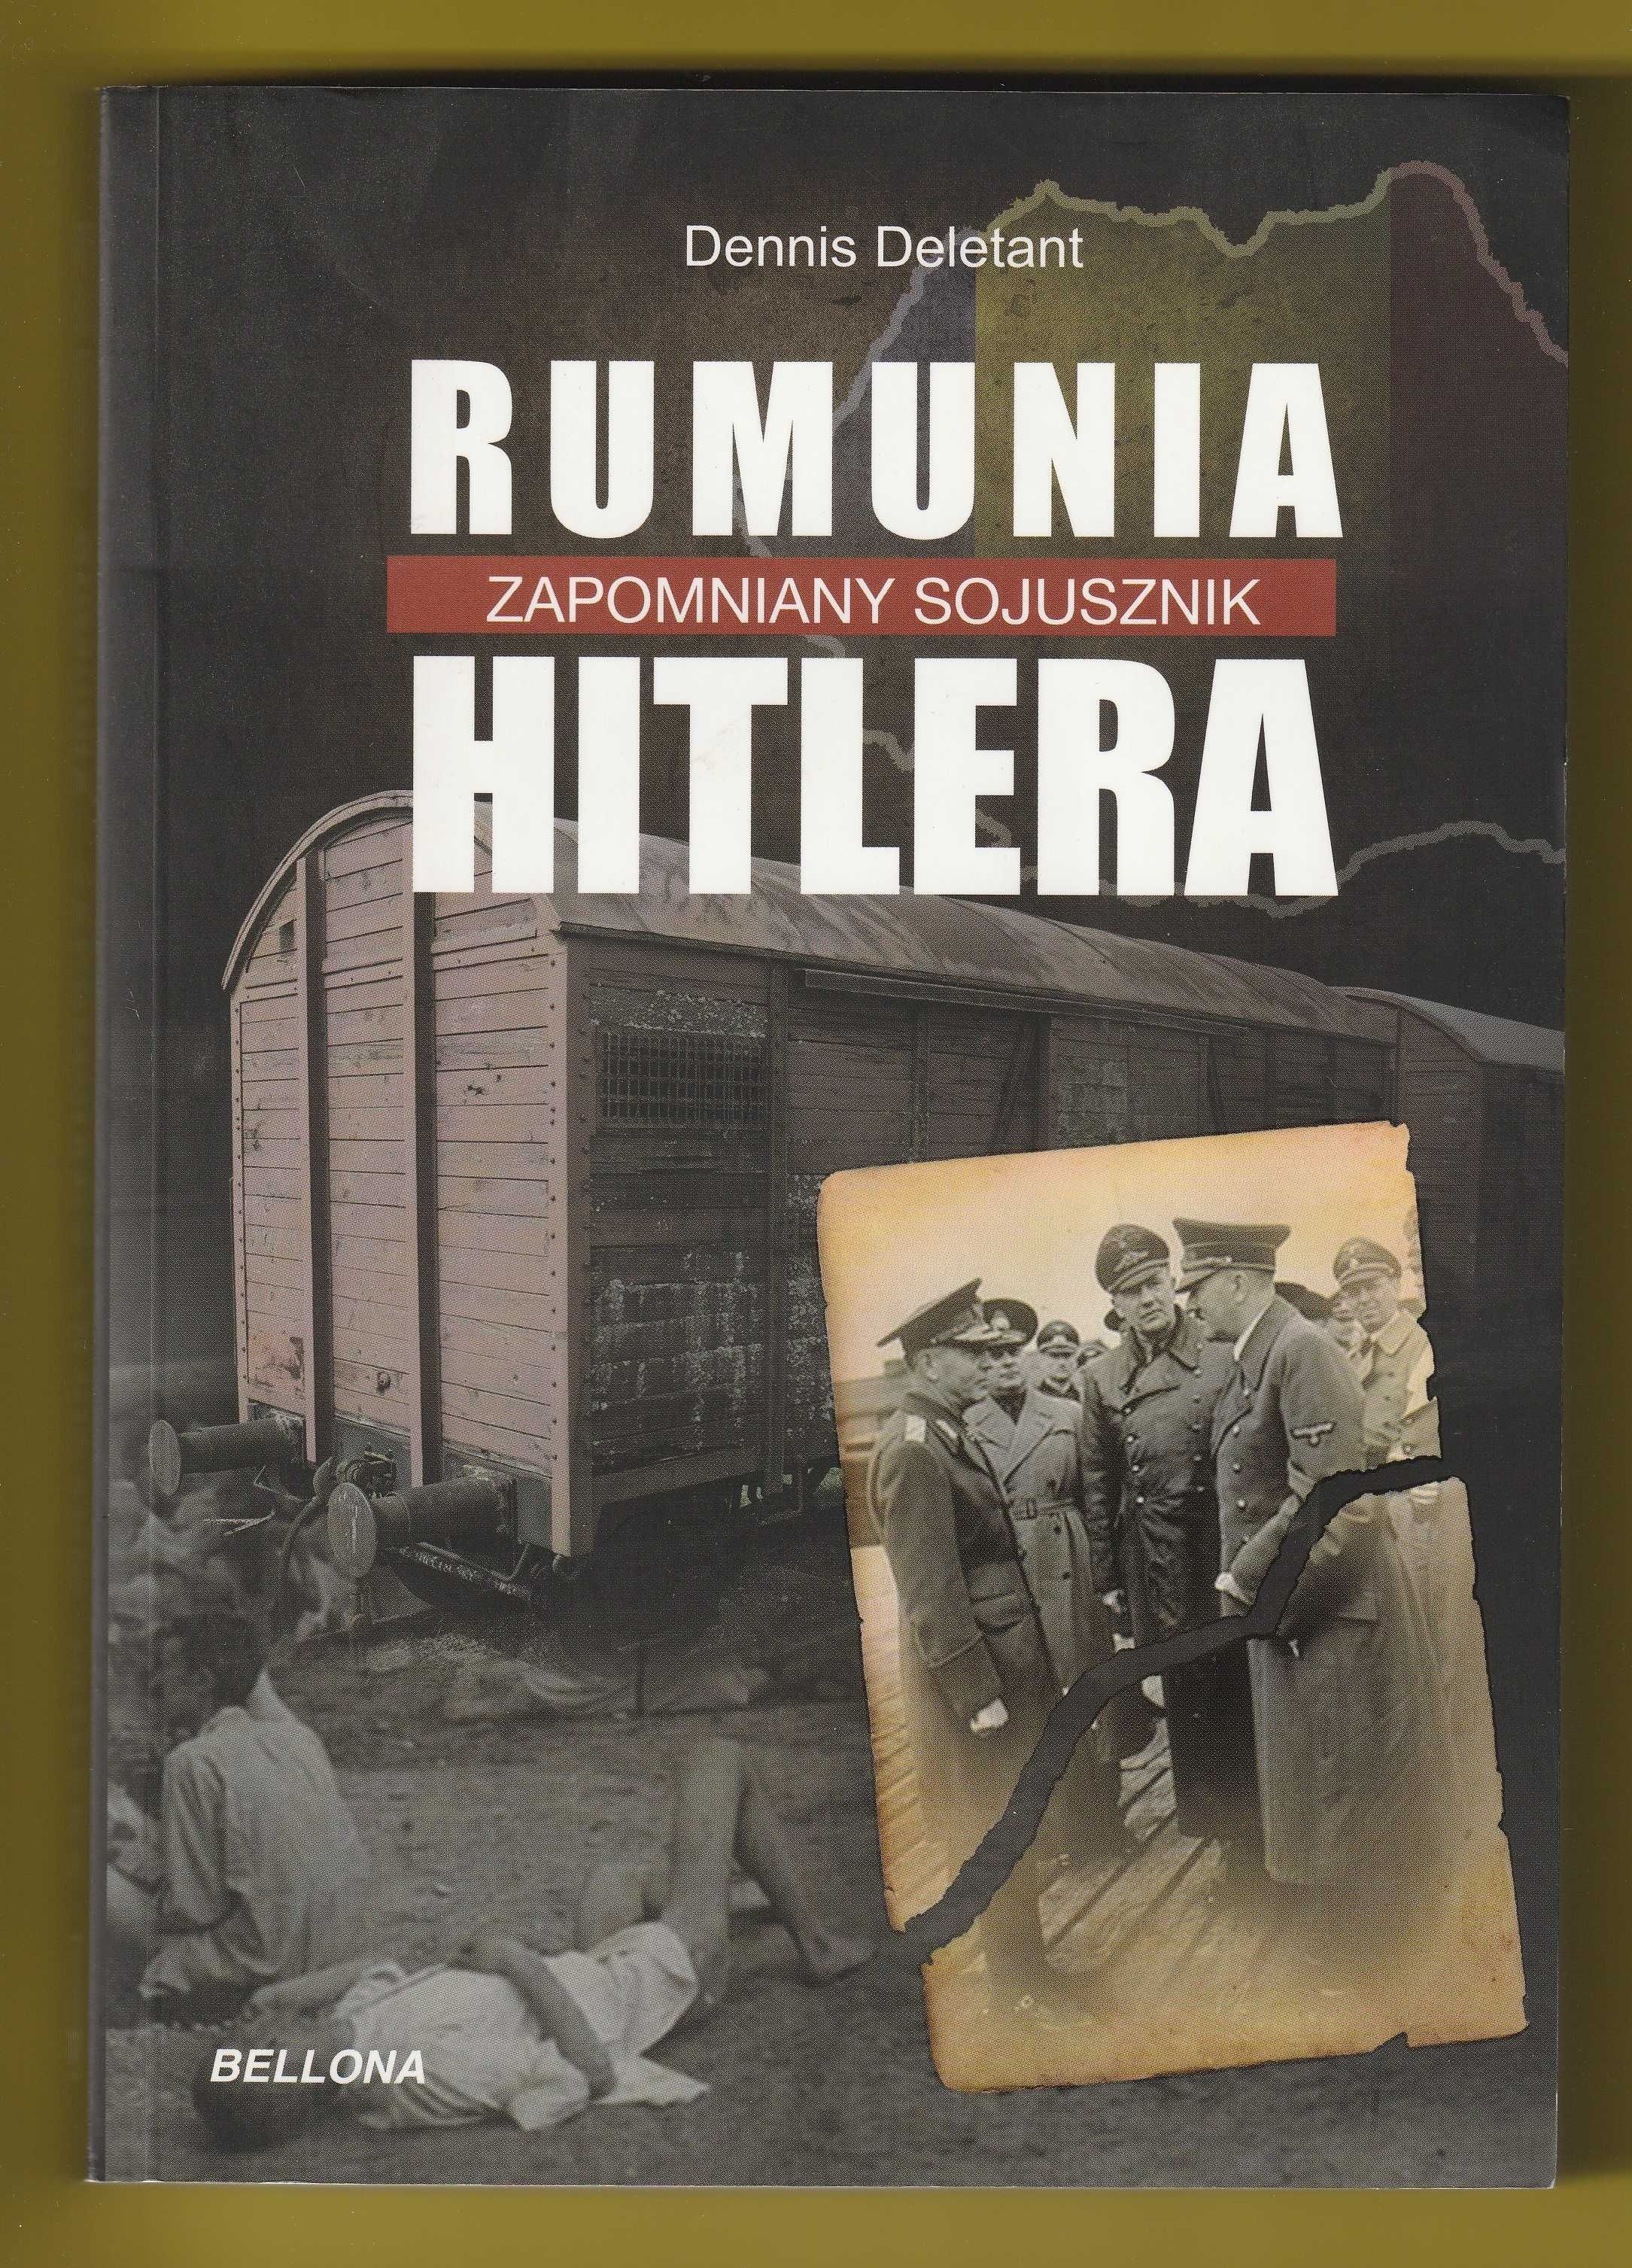 RUMUNIA zapomniany sojusznik Hitlera - Dennis Deletant - 2005